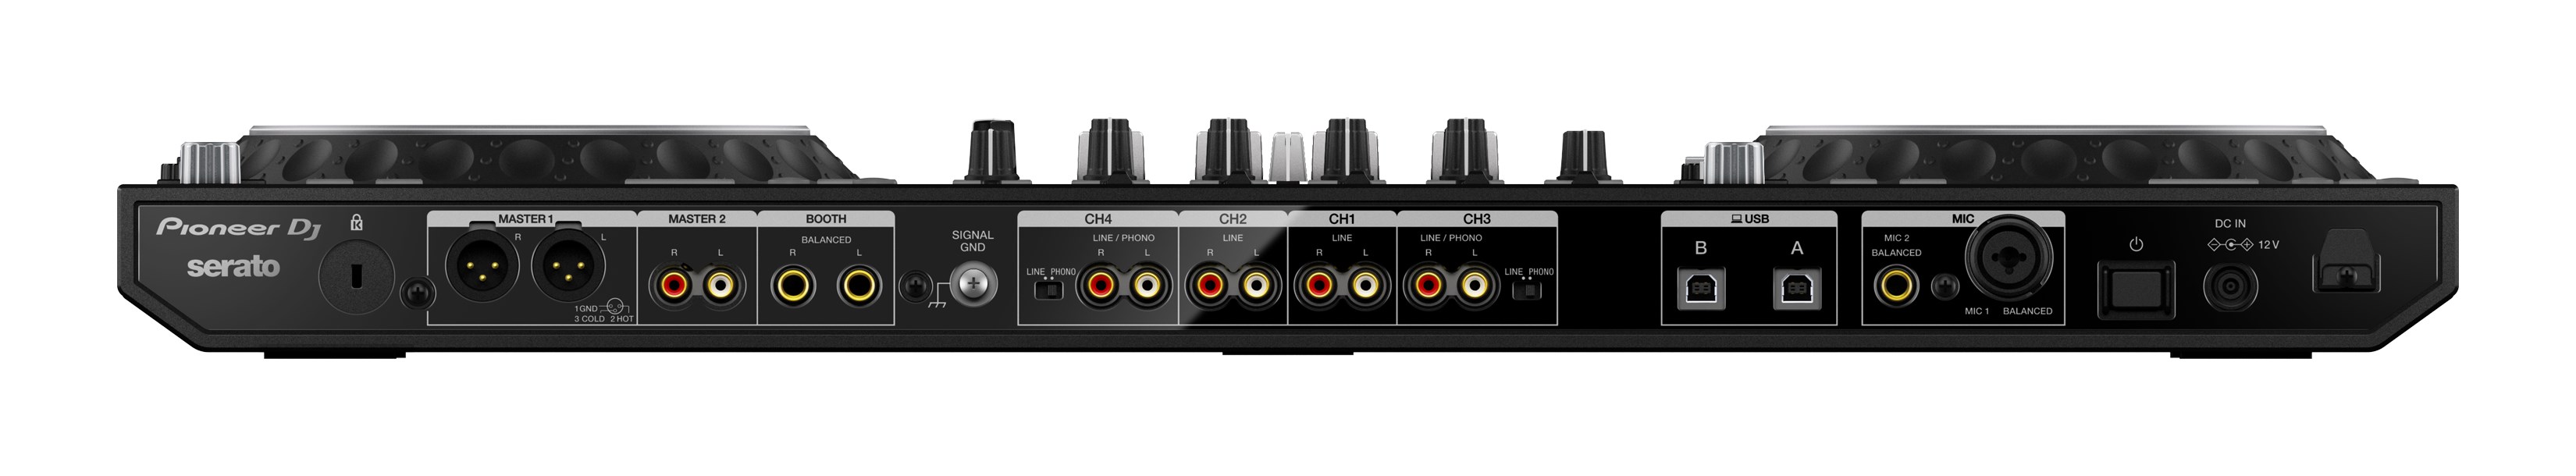 Pioneer Dj Ddj-1000srt - Controlador DJ USB - Variation 3